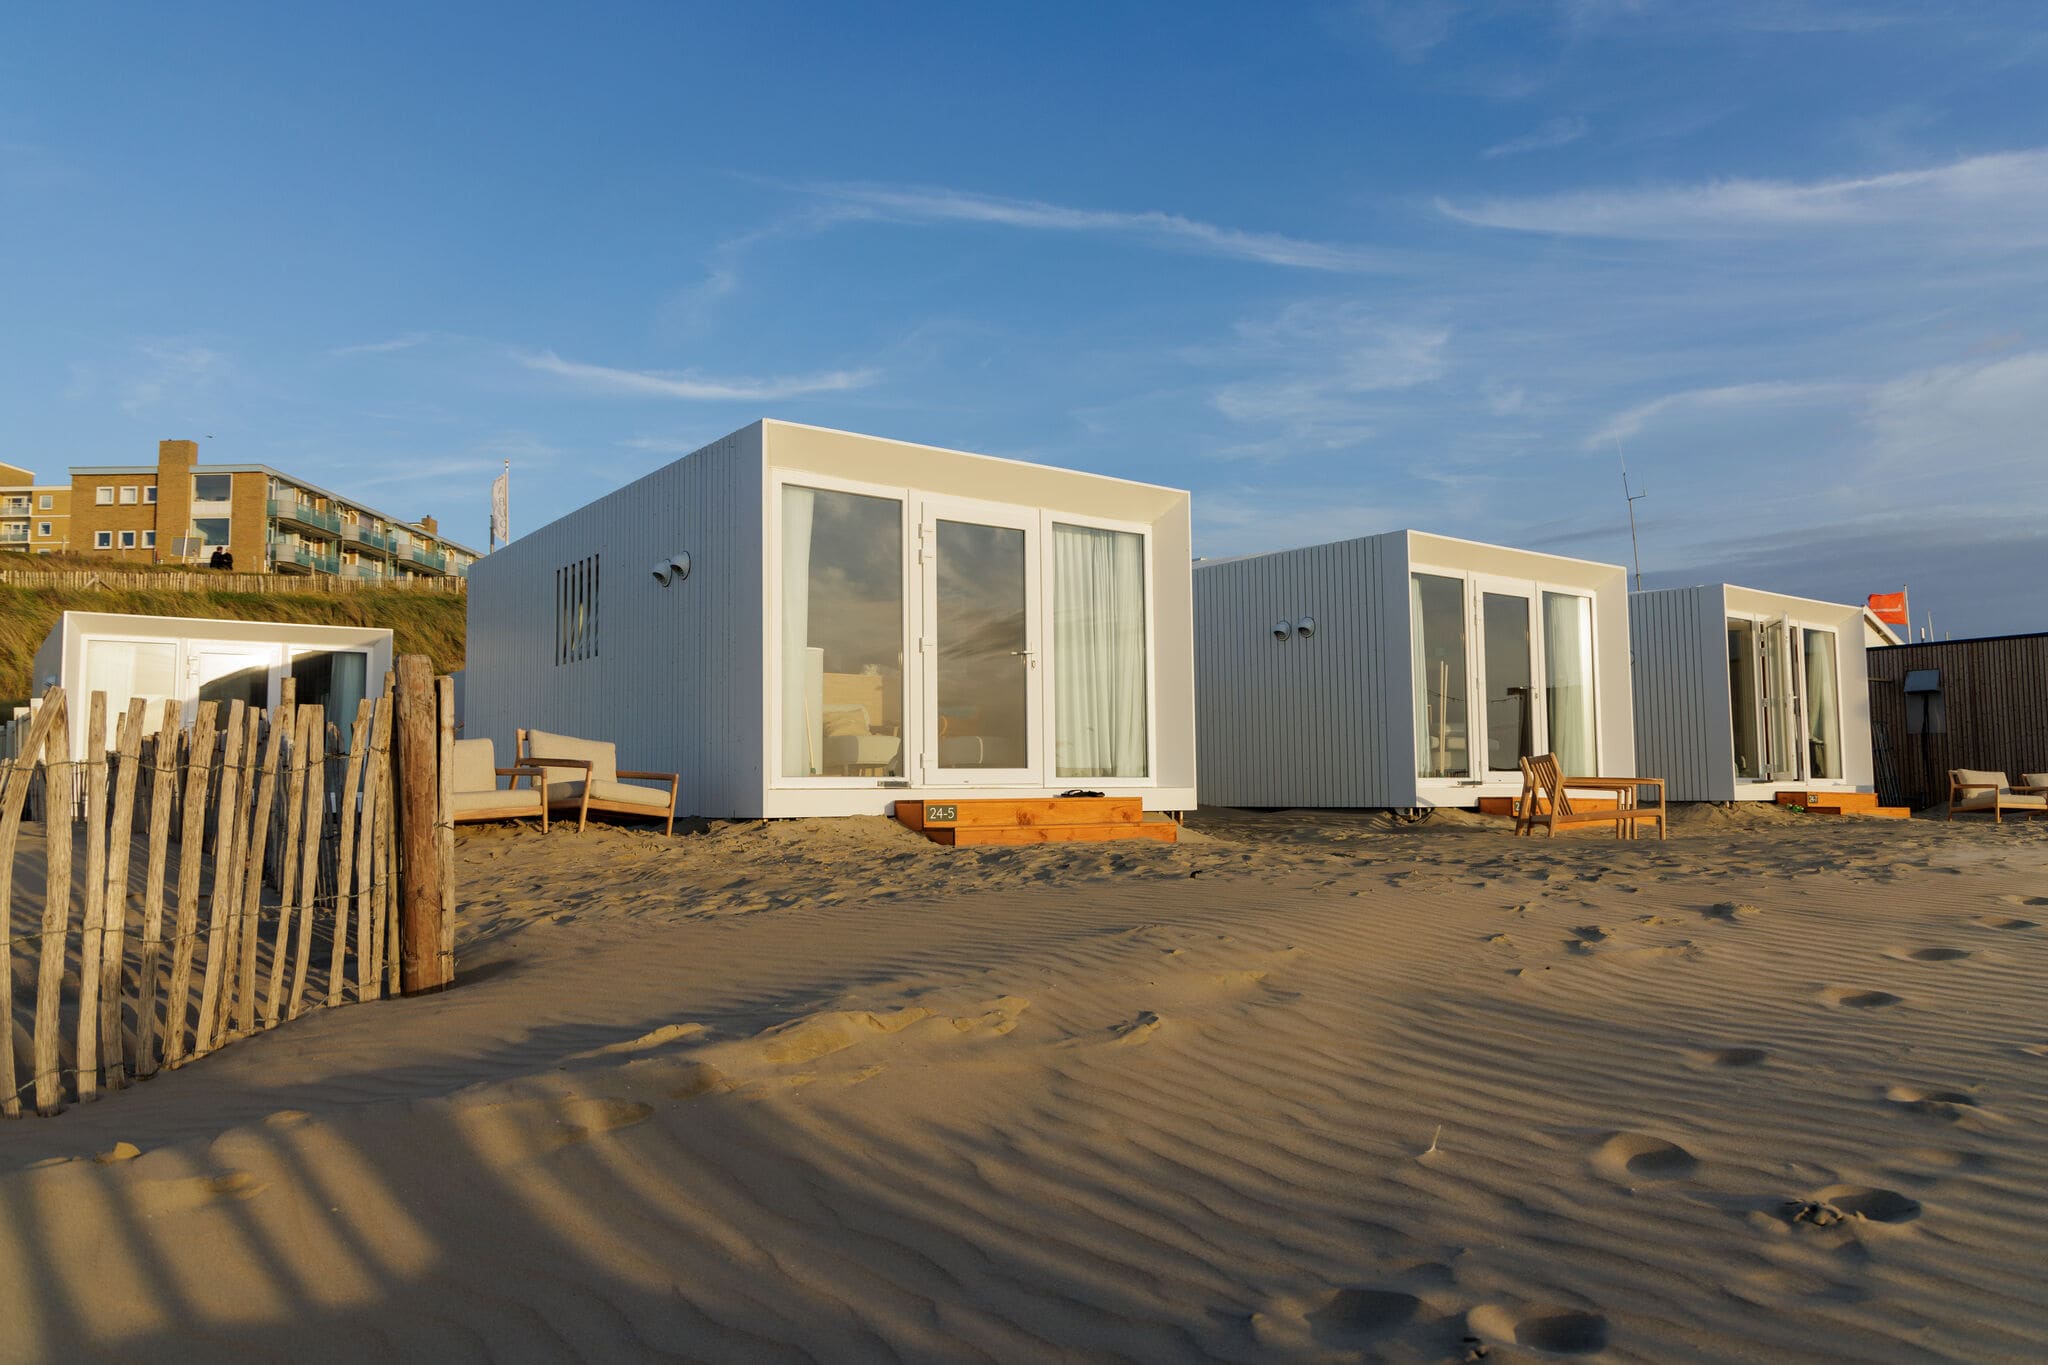 Unique beach house on the beach of Zandvoort